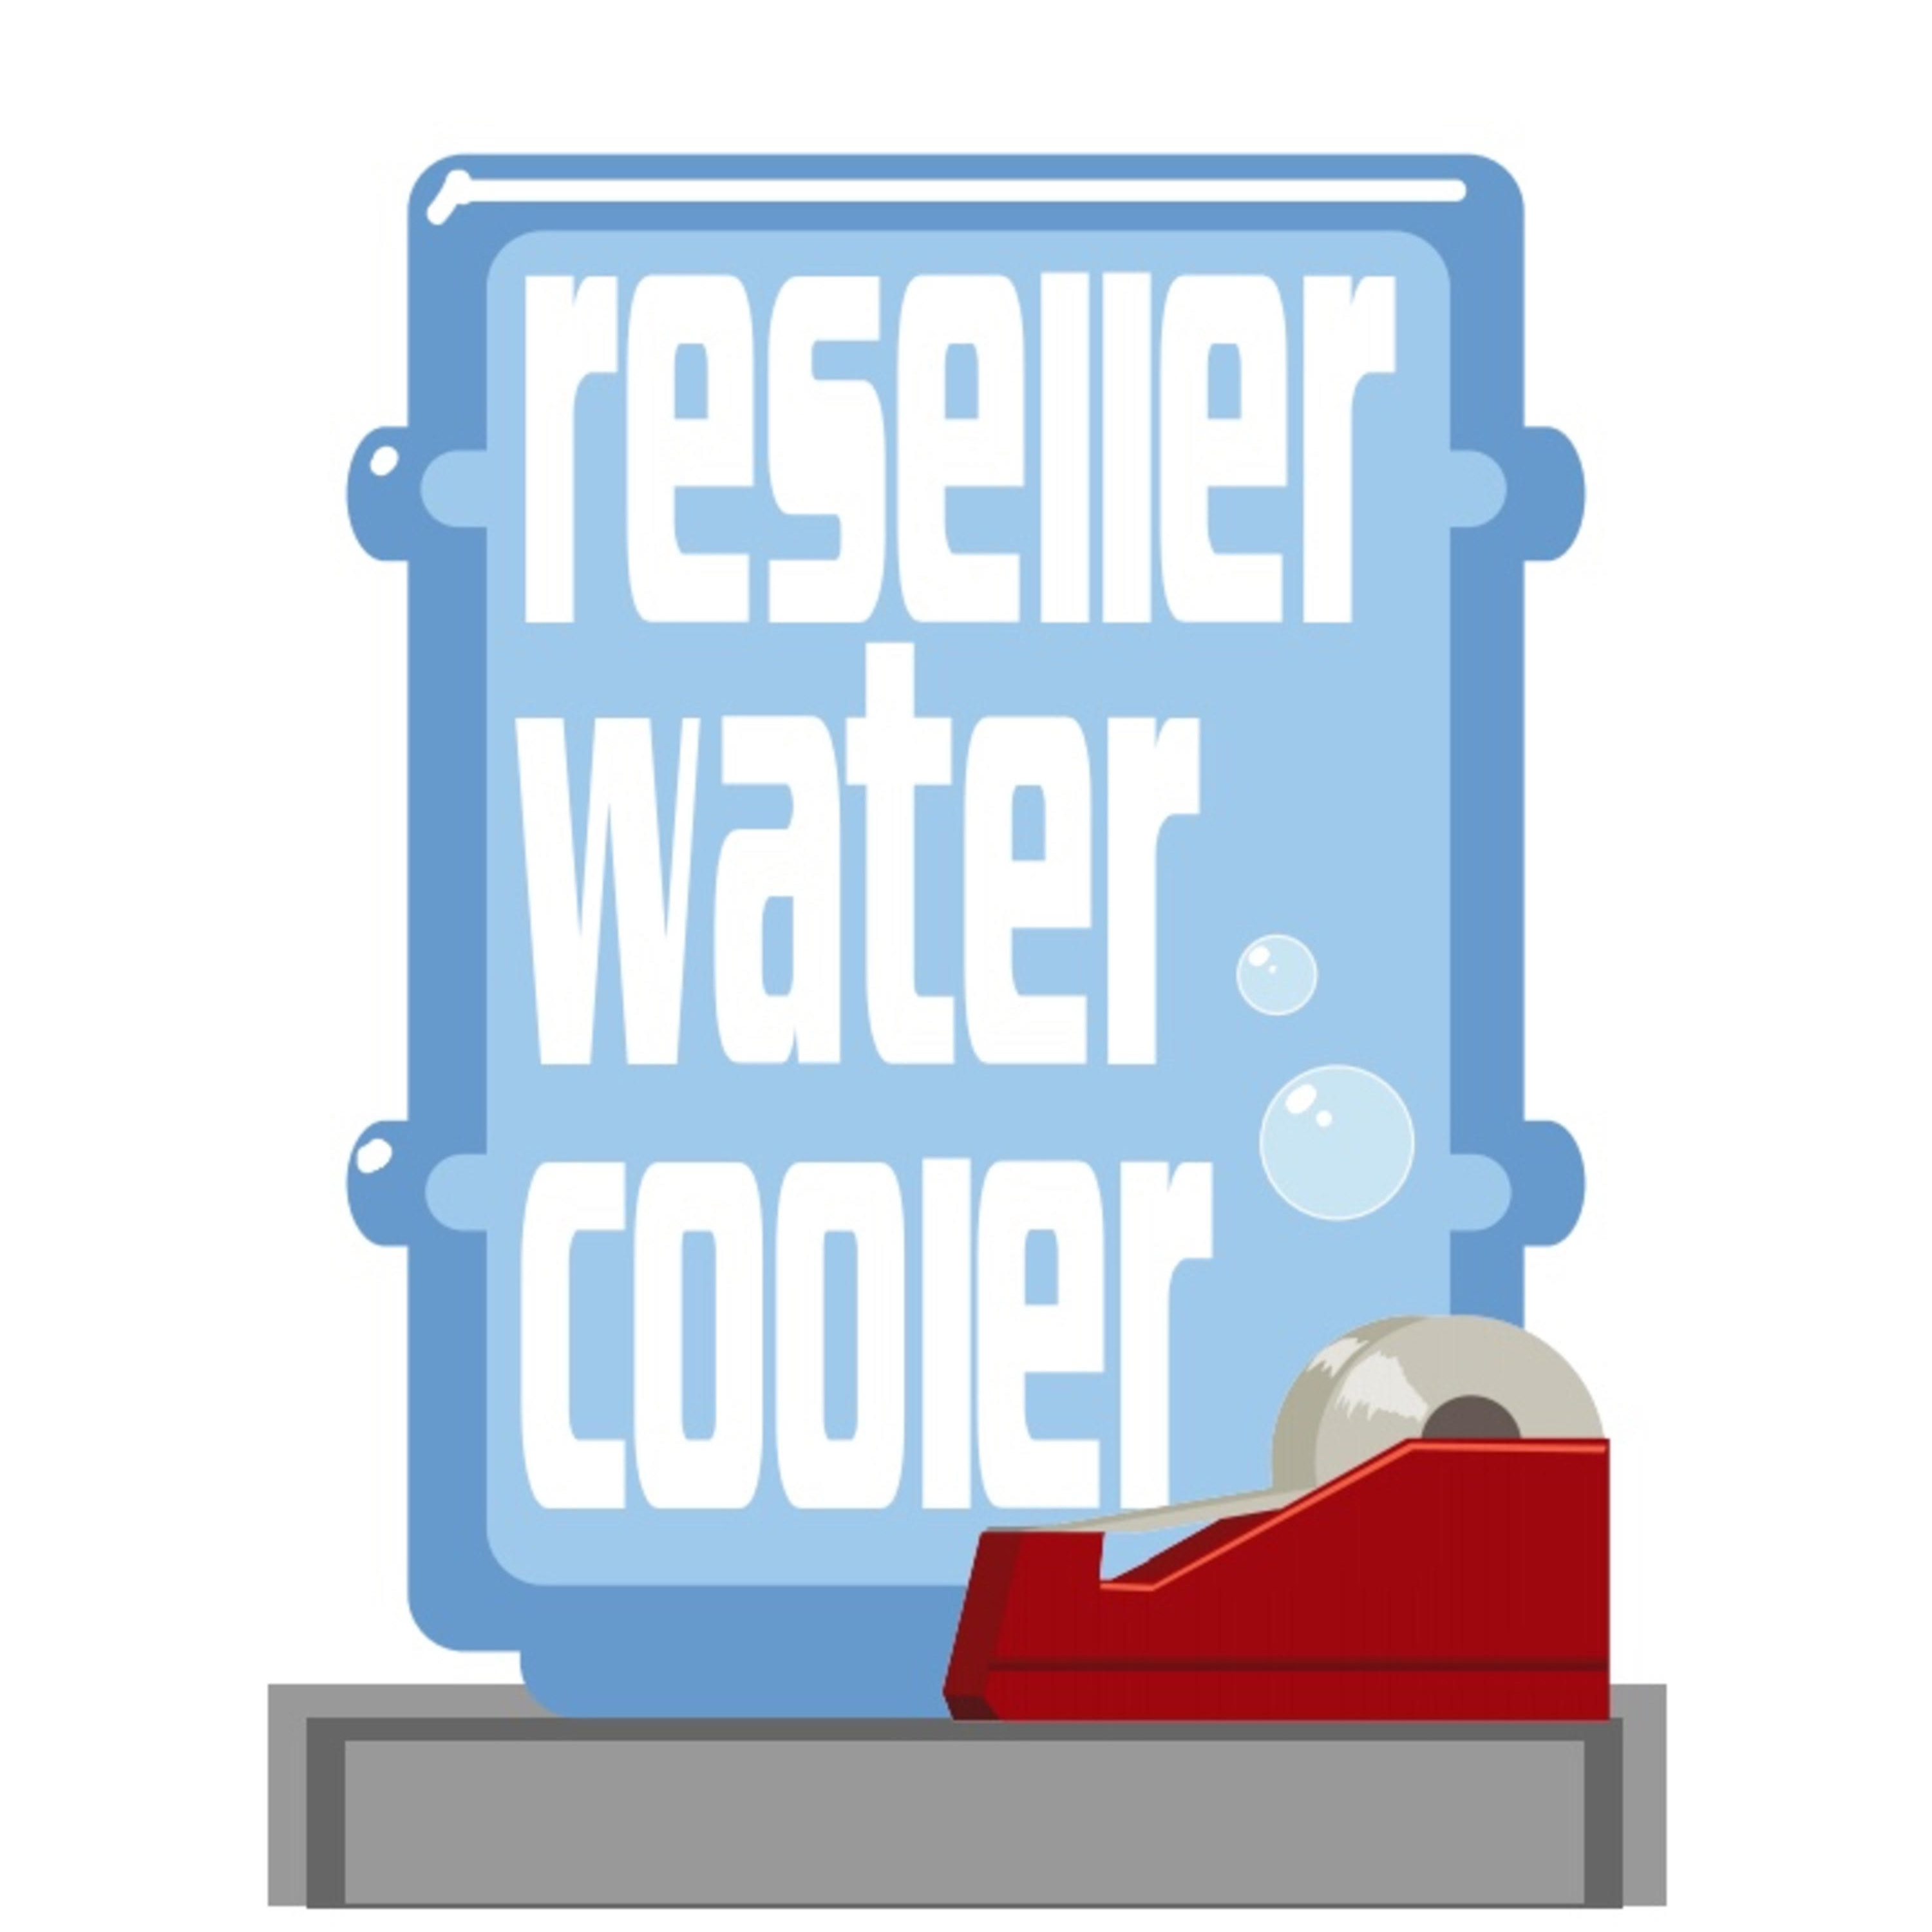 Reseller water cooler.